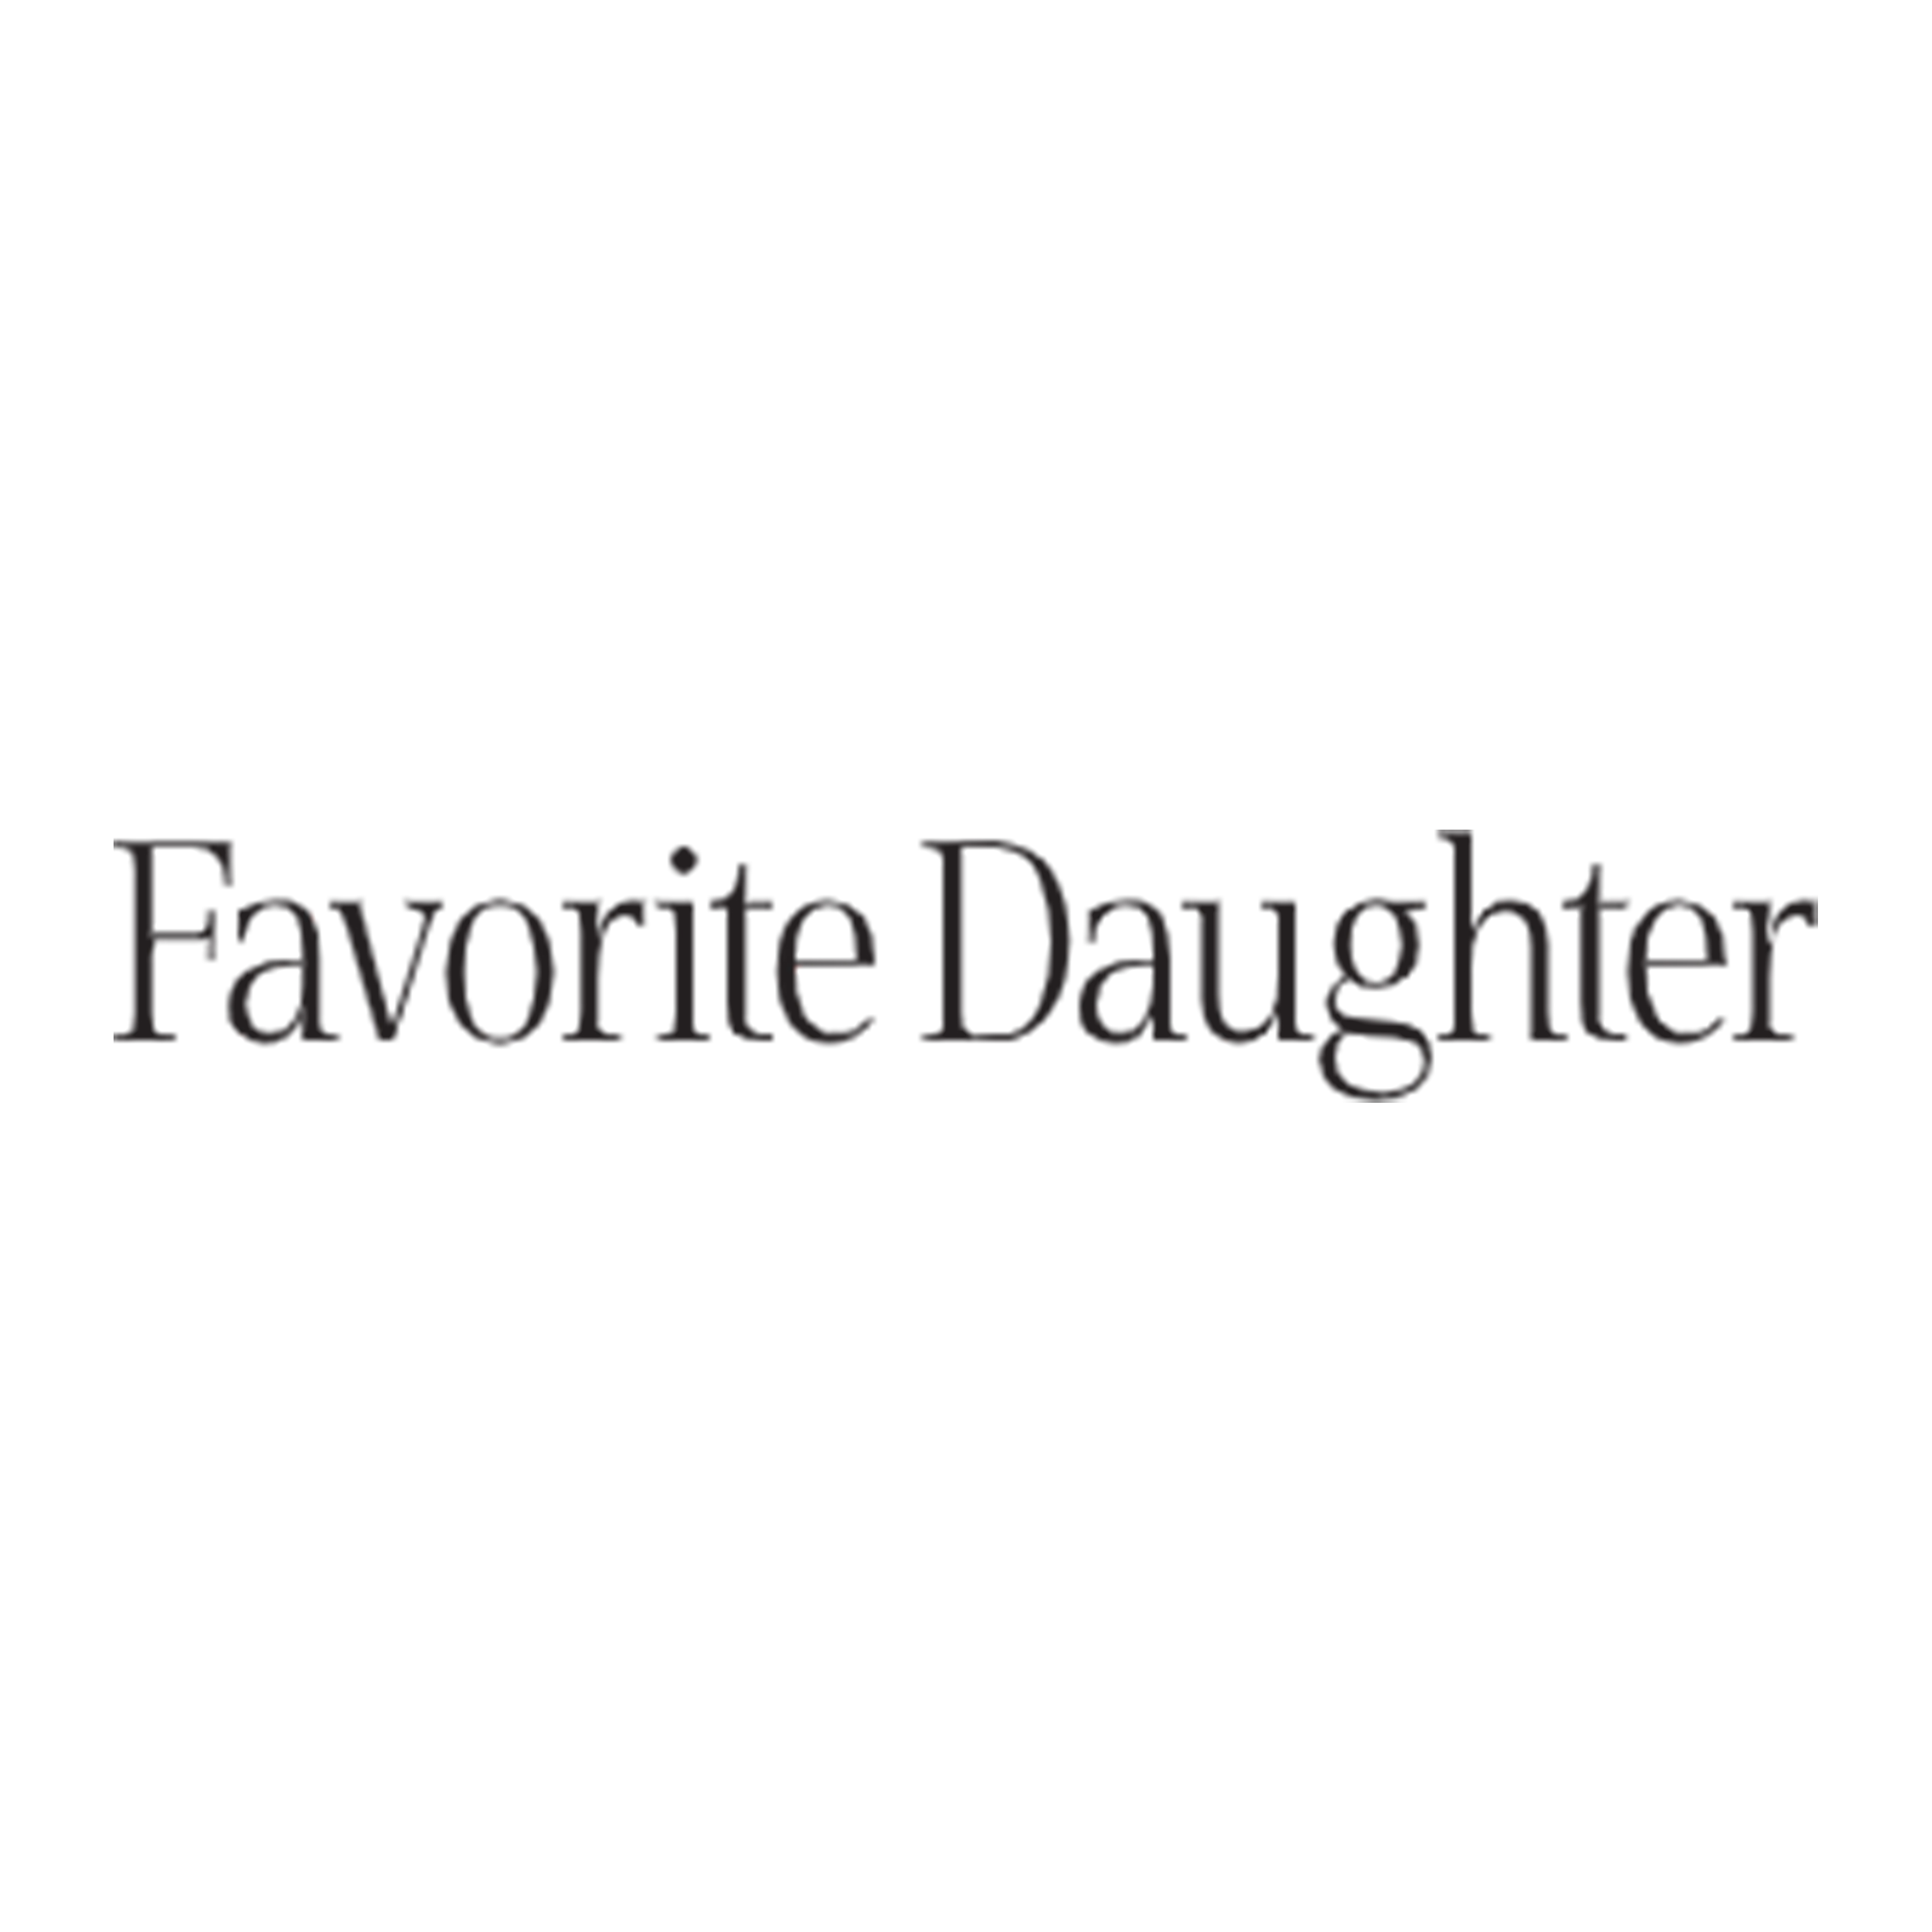 Favorite Daughter logo